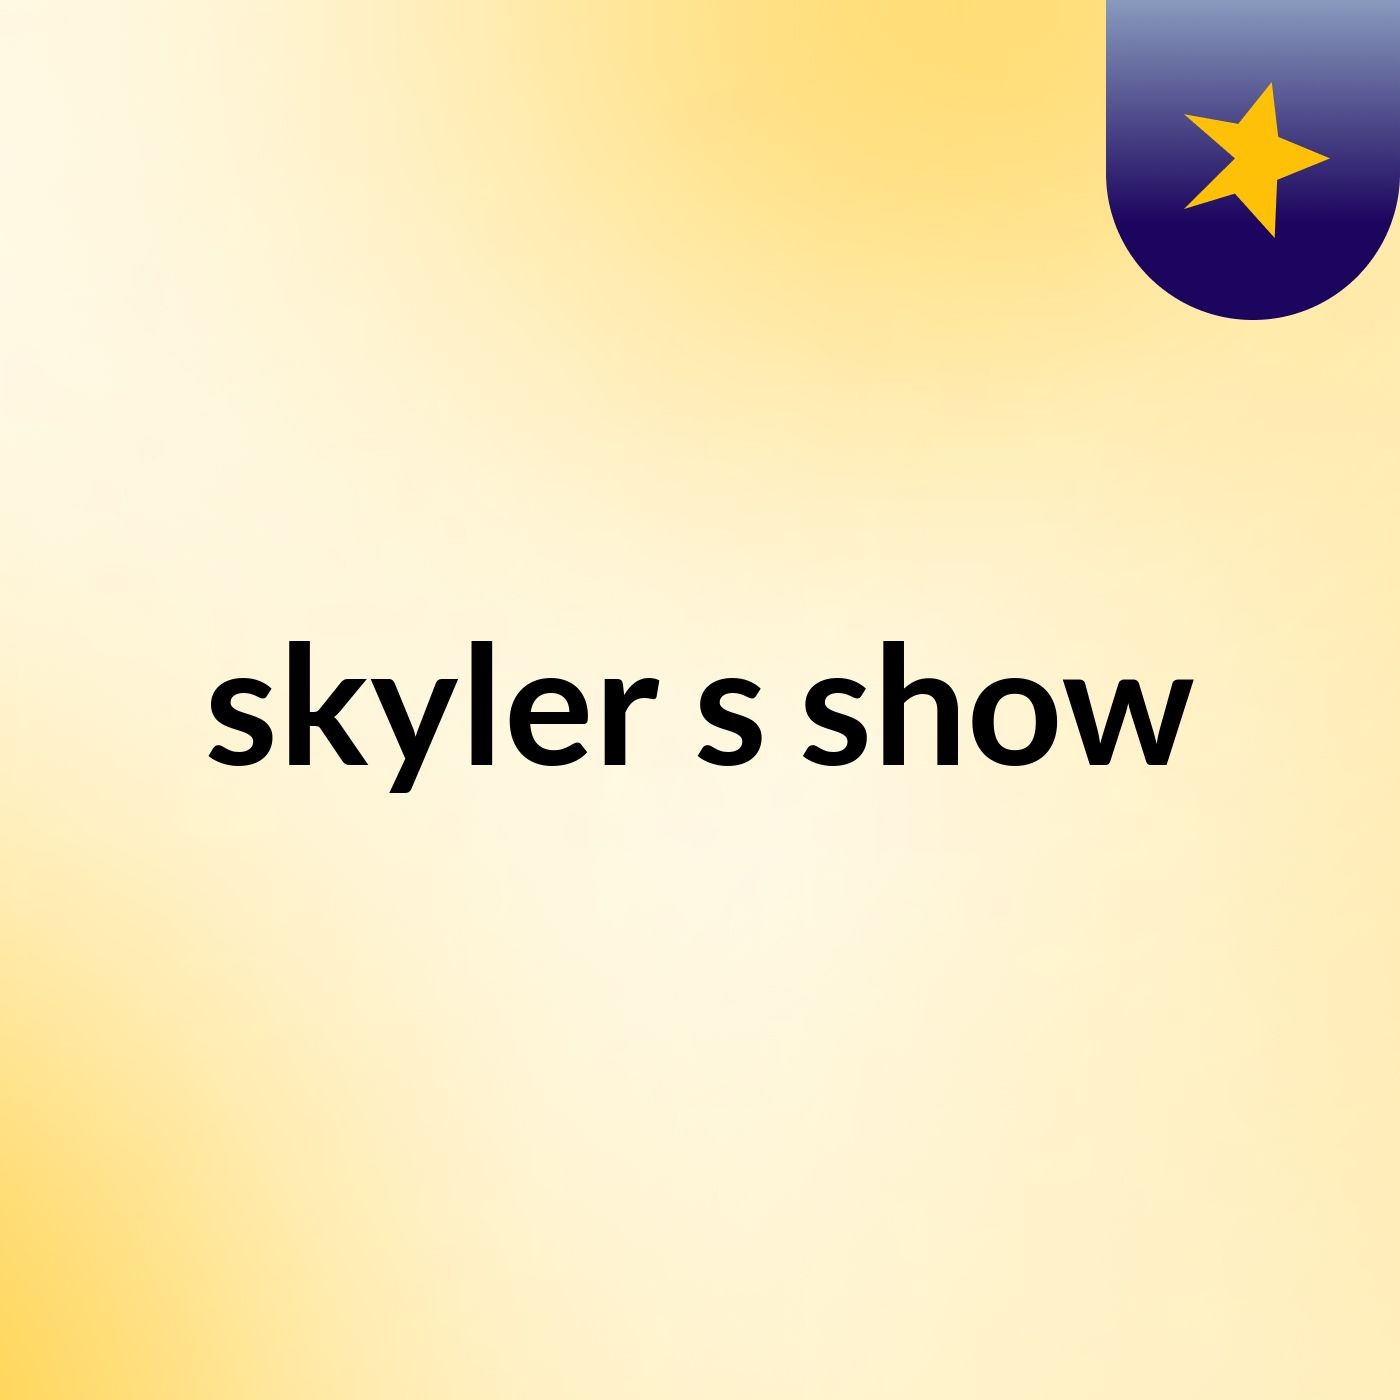 skyler's show